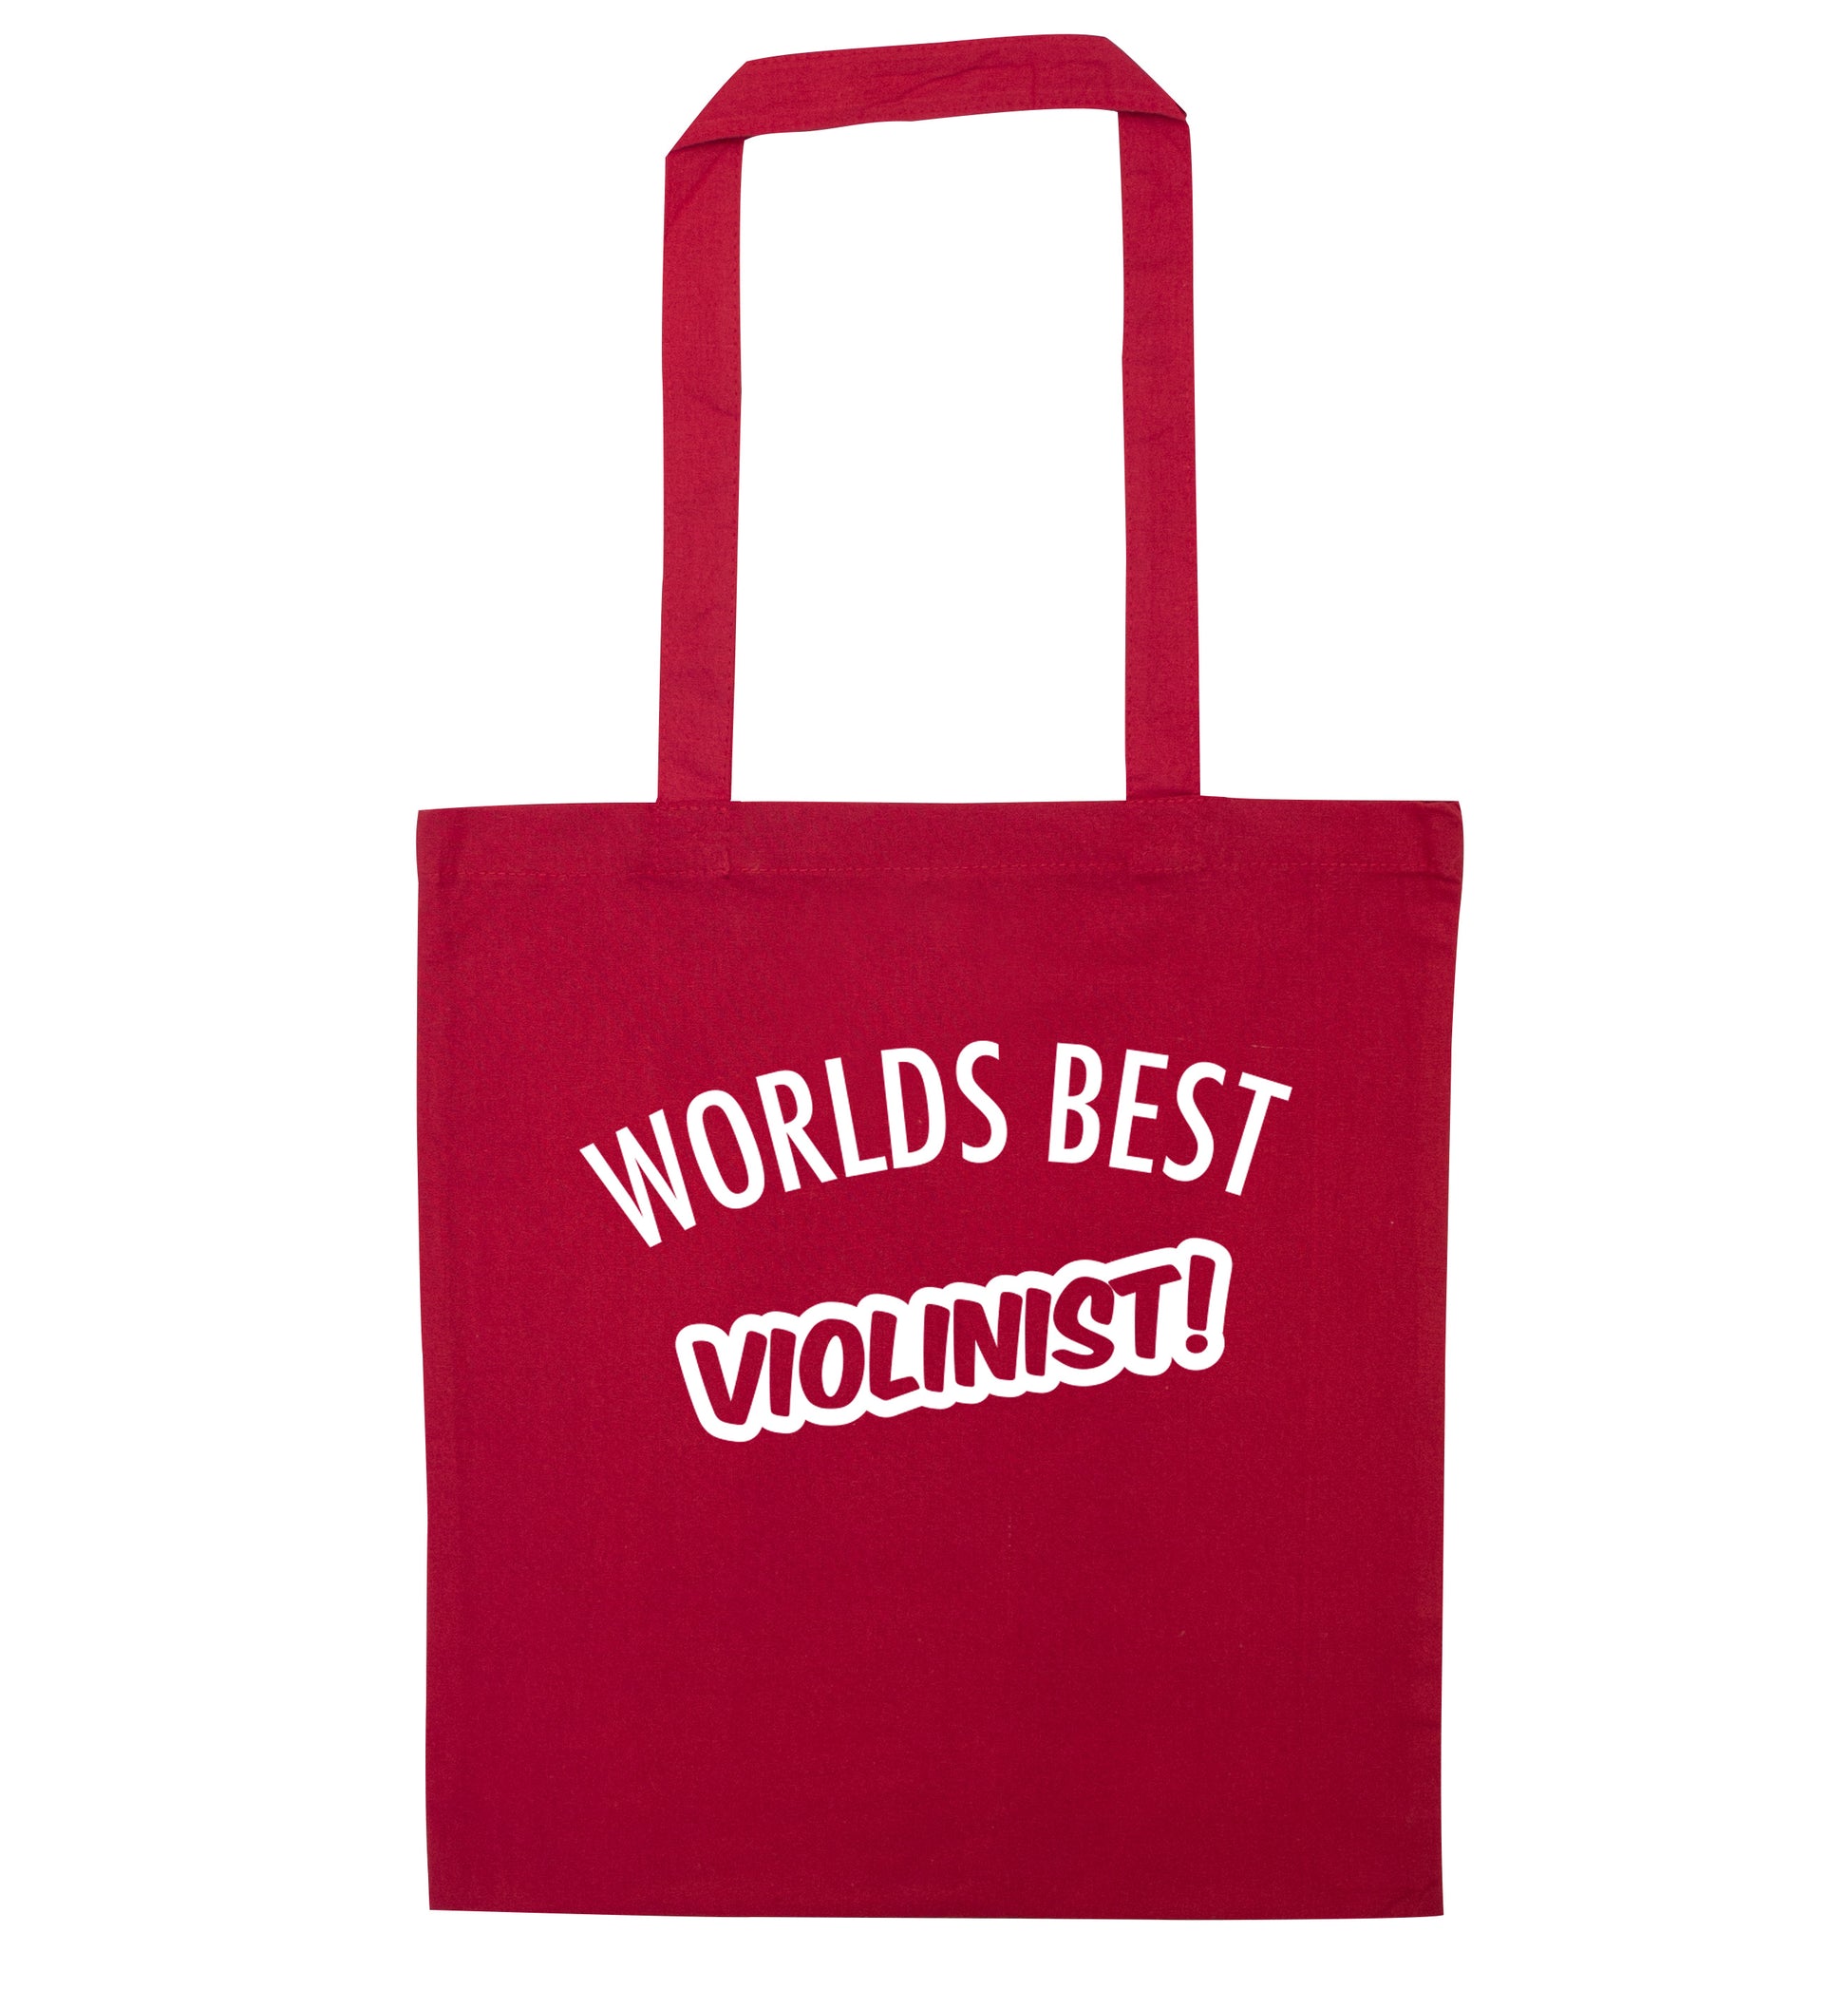 Worlds best violinist red tote bag